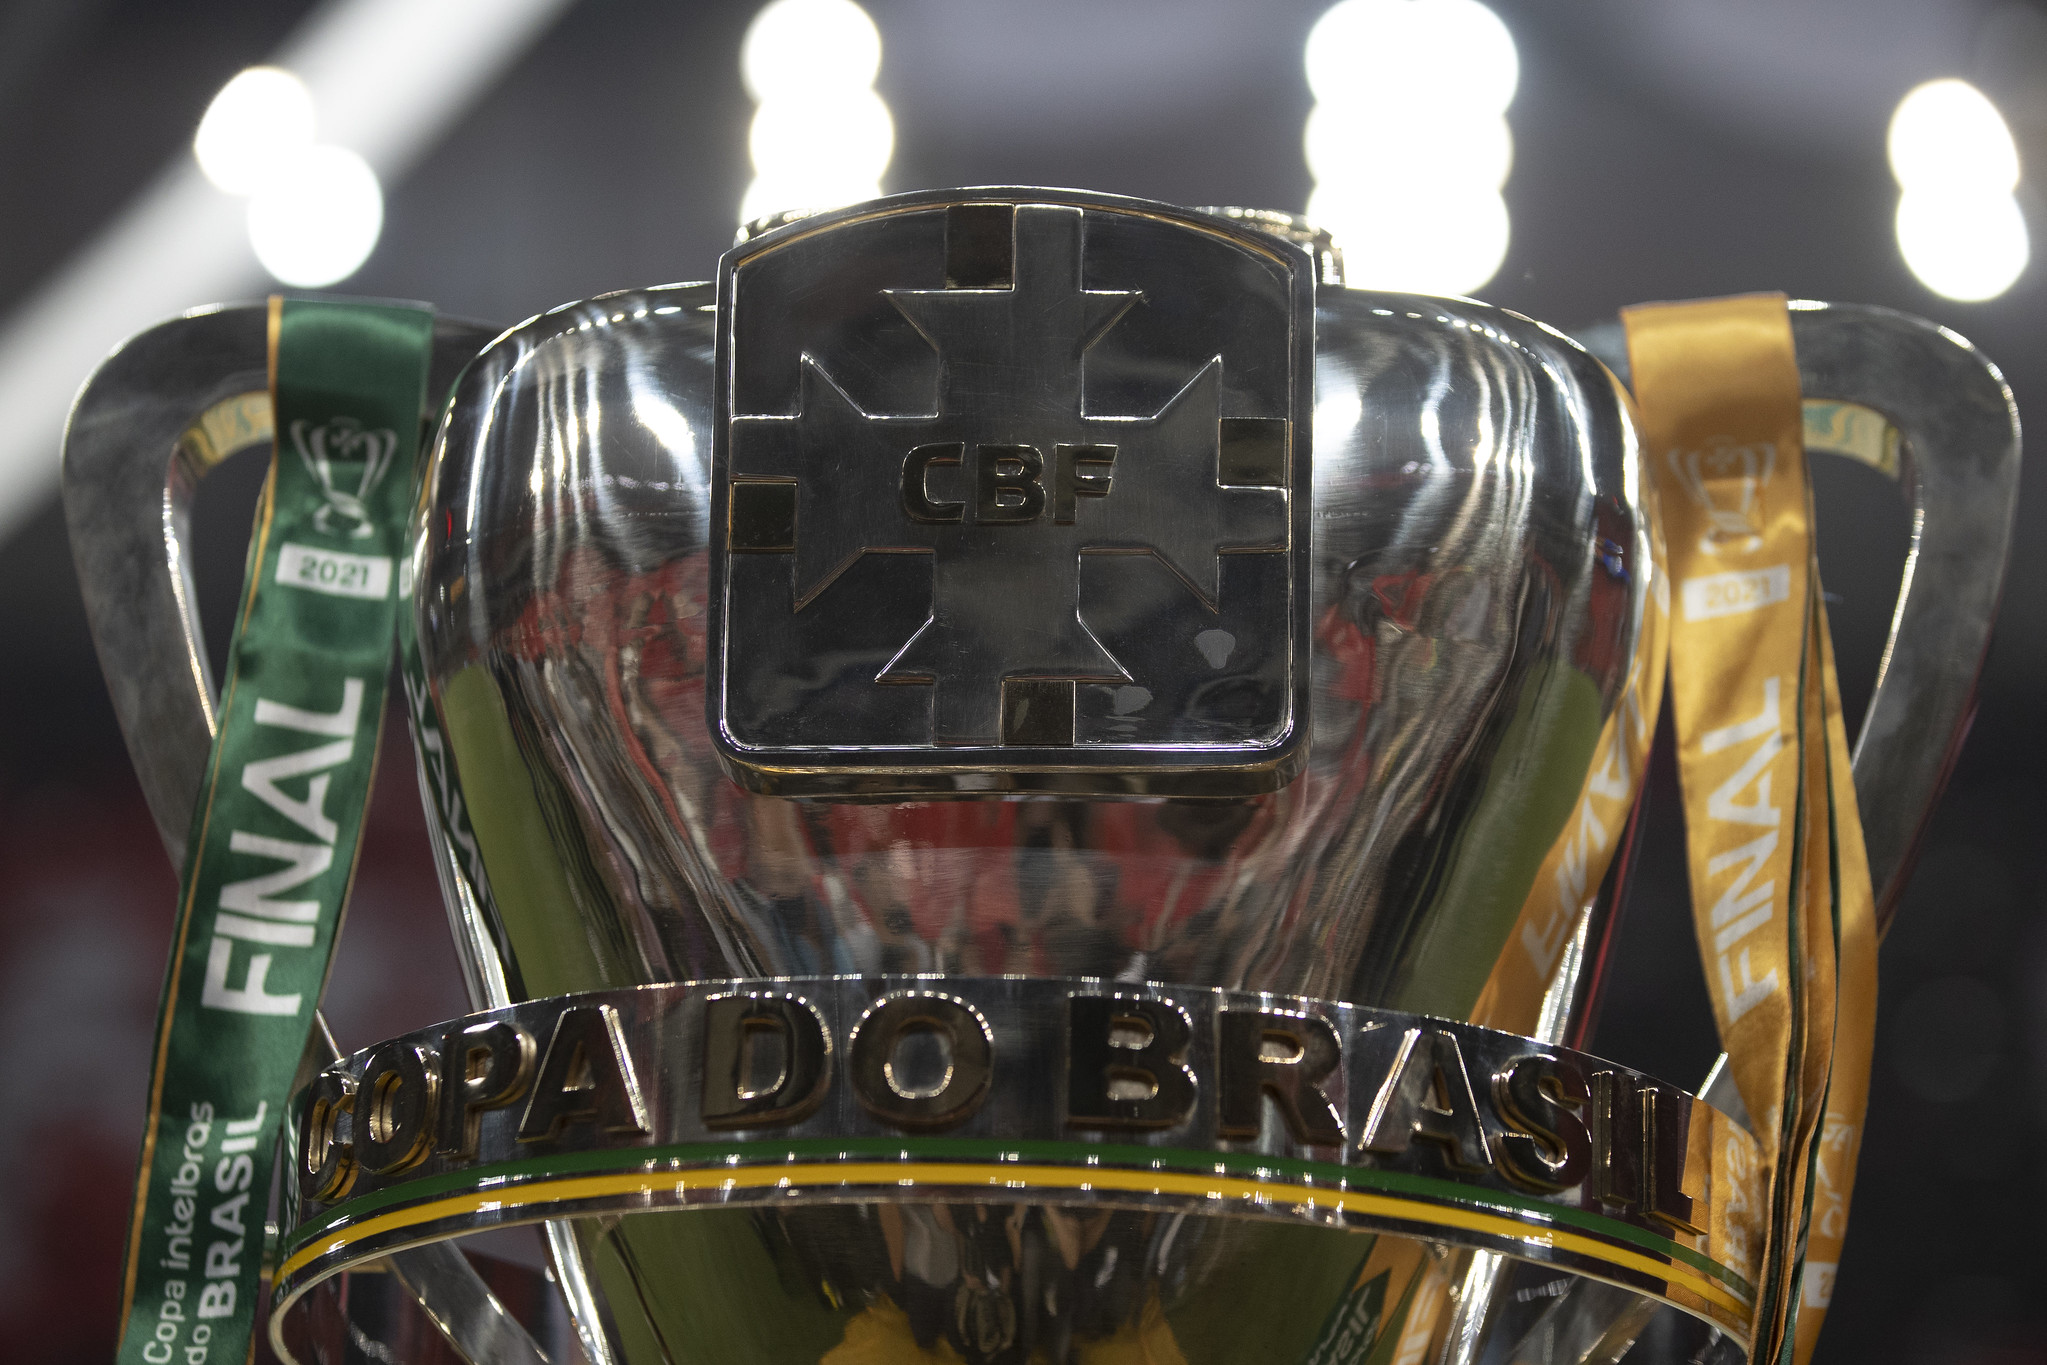 Copa Santa Catarina 2021 começa no dia 19 de setembro com oito equipes, copa  santa catarina